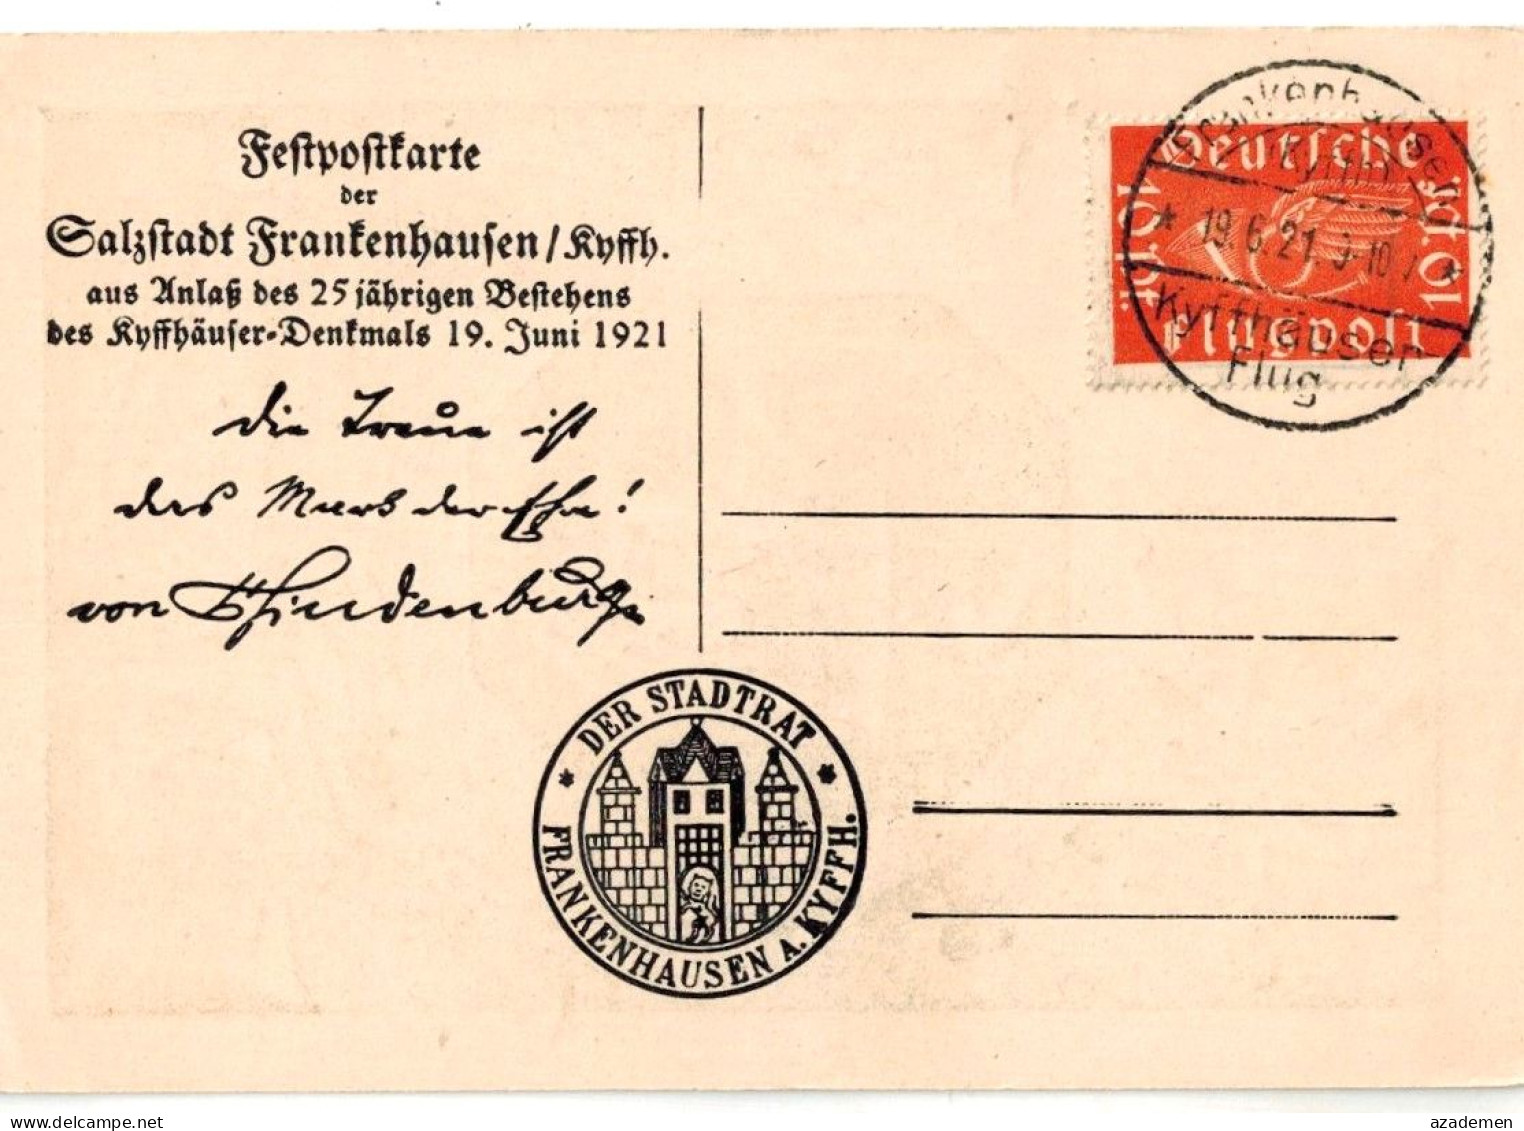 DER STADTRAT FRANKENHAUSEN 1921 - Covers & Documents